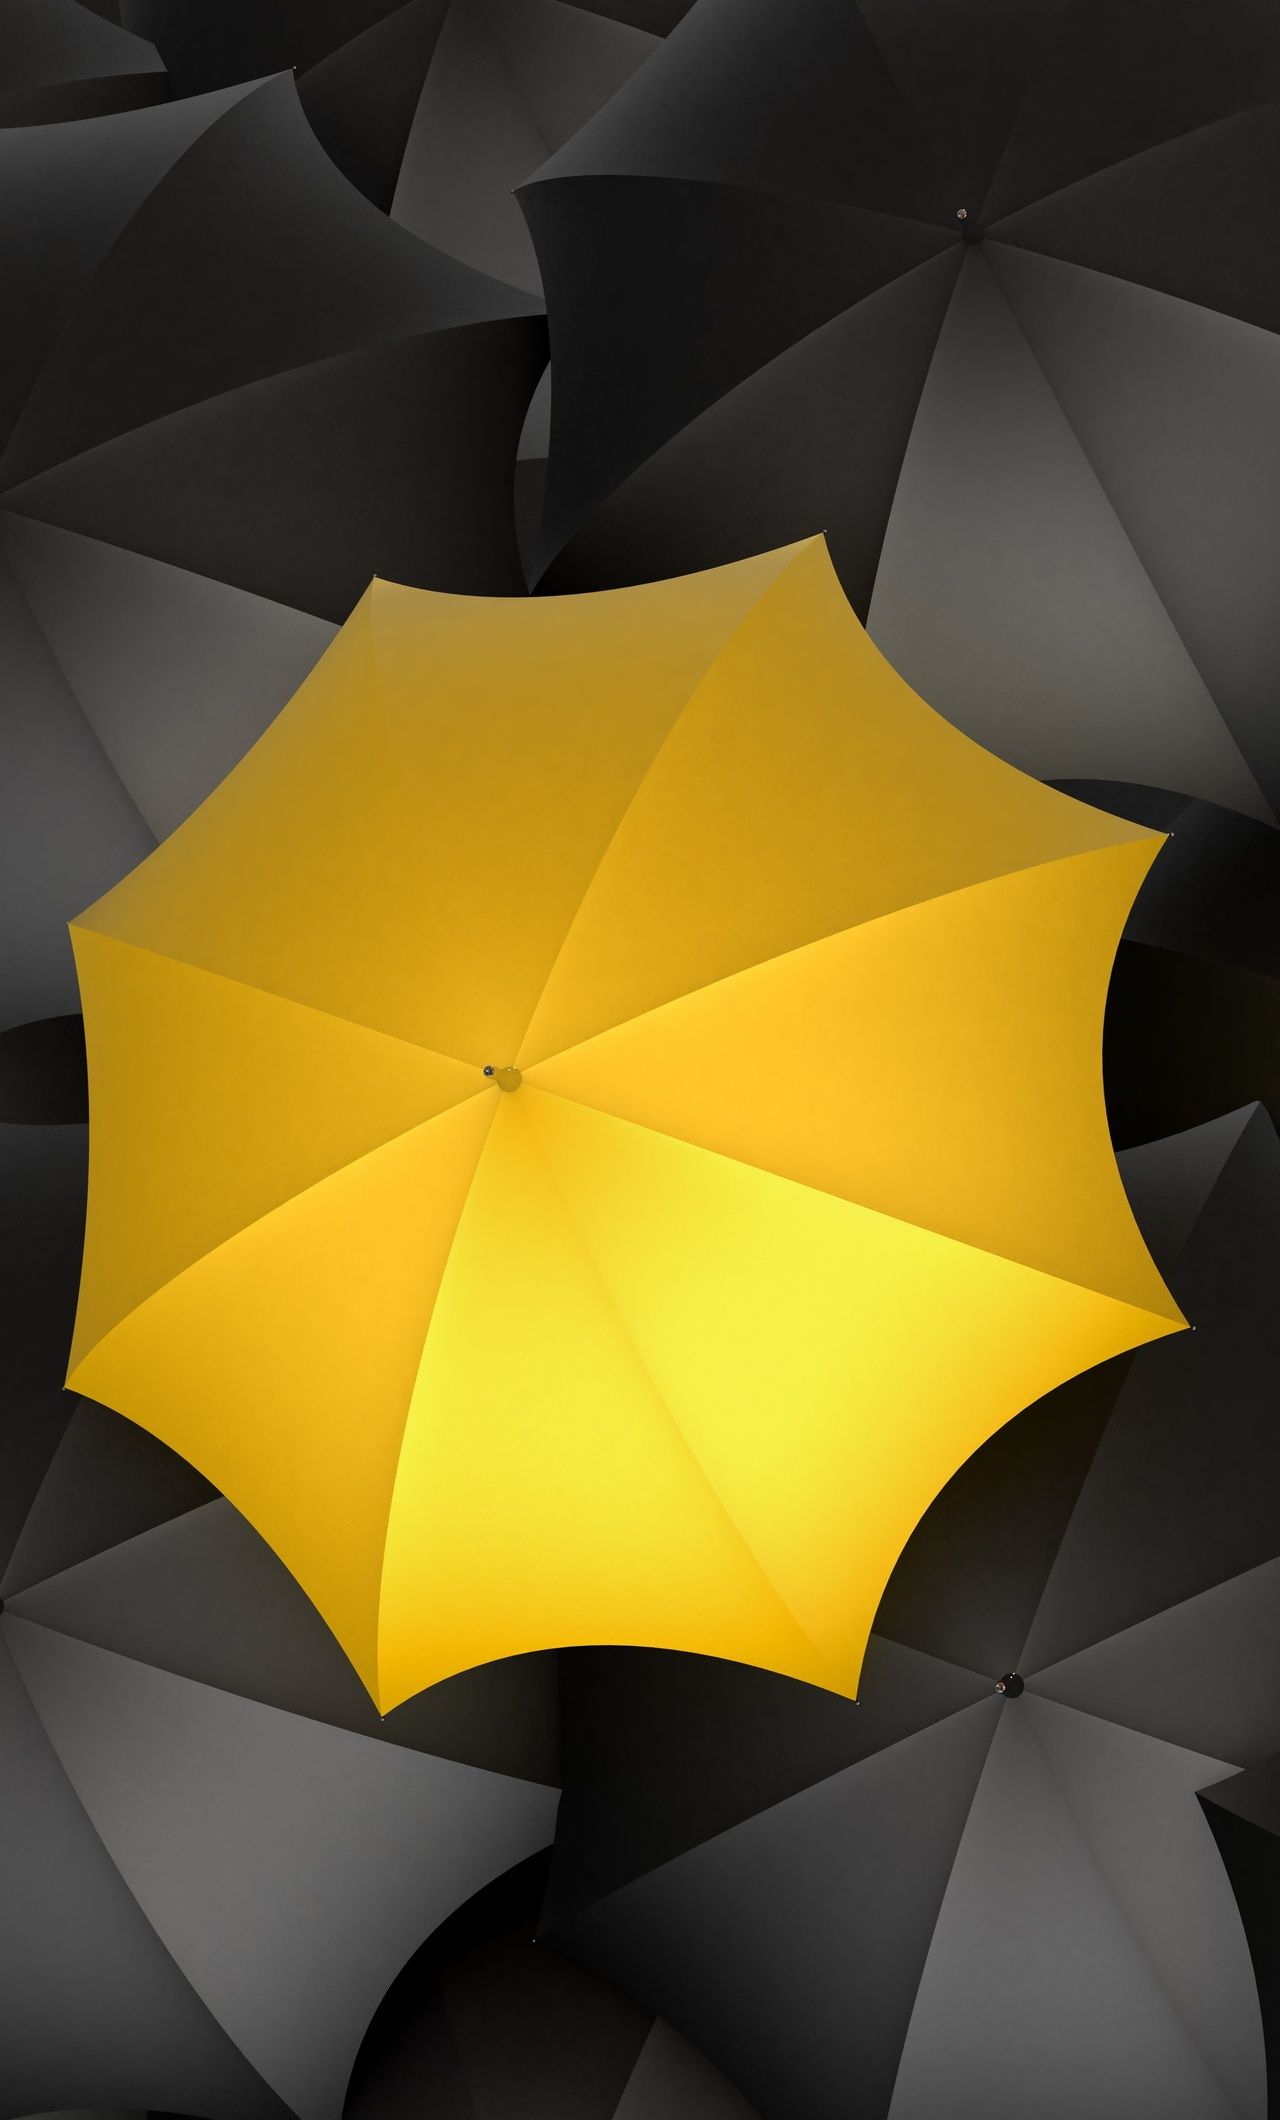 Umbrella Monochrome Yellow Digital Art 5k iPhone HD 4k Wallpaper, Image, Background, Photo and Picture